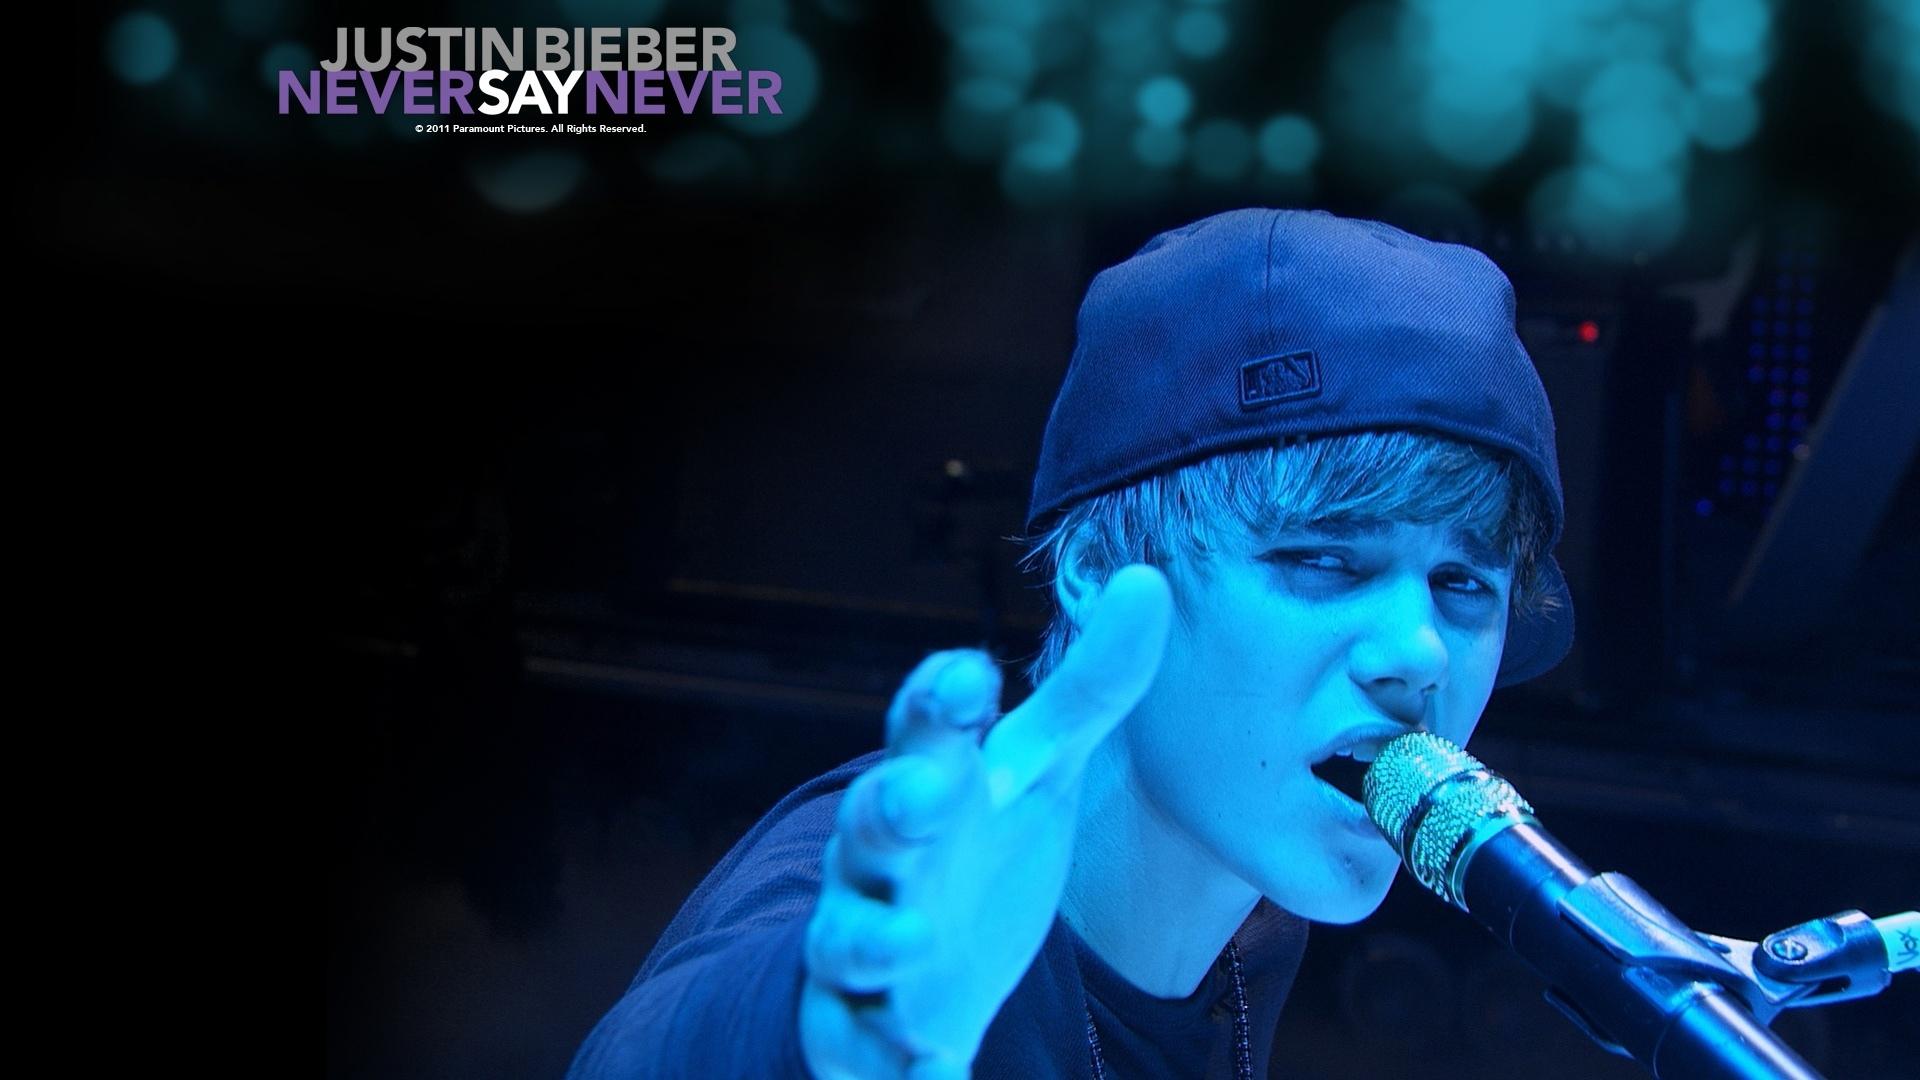 Justin Bieber at 1024 x 1024 iPad size wallpapers HD quality